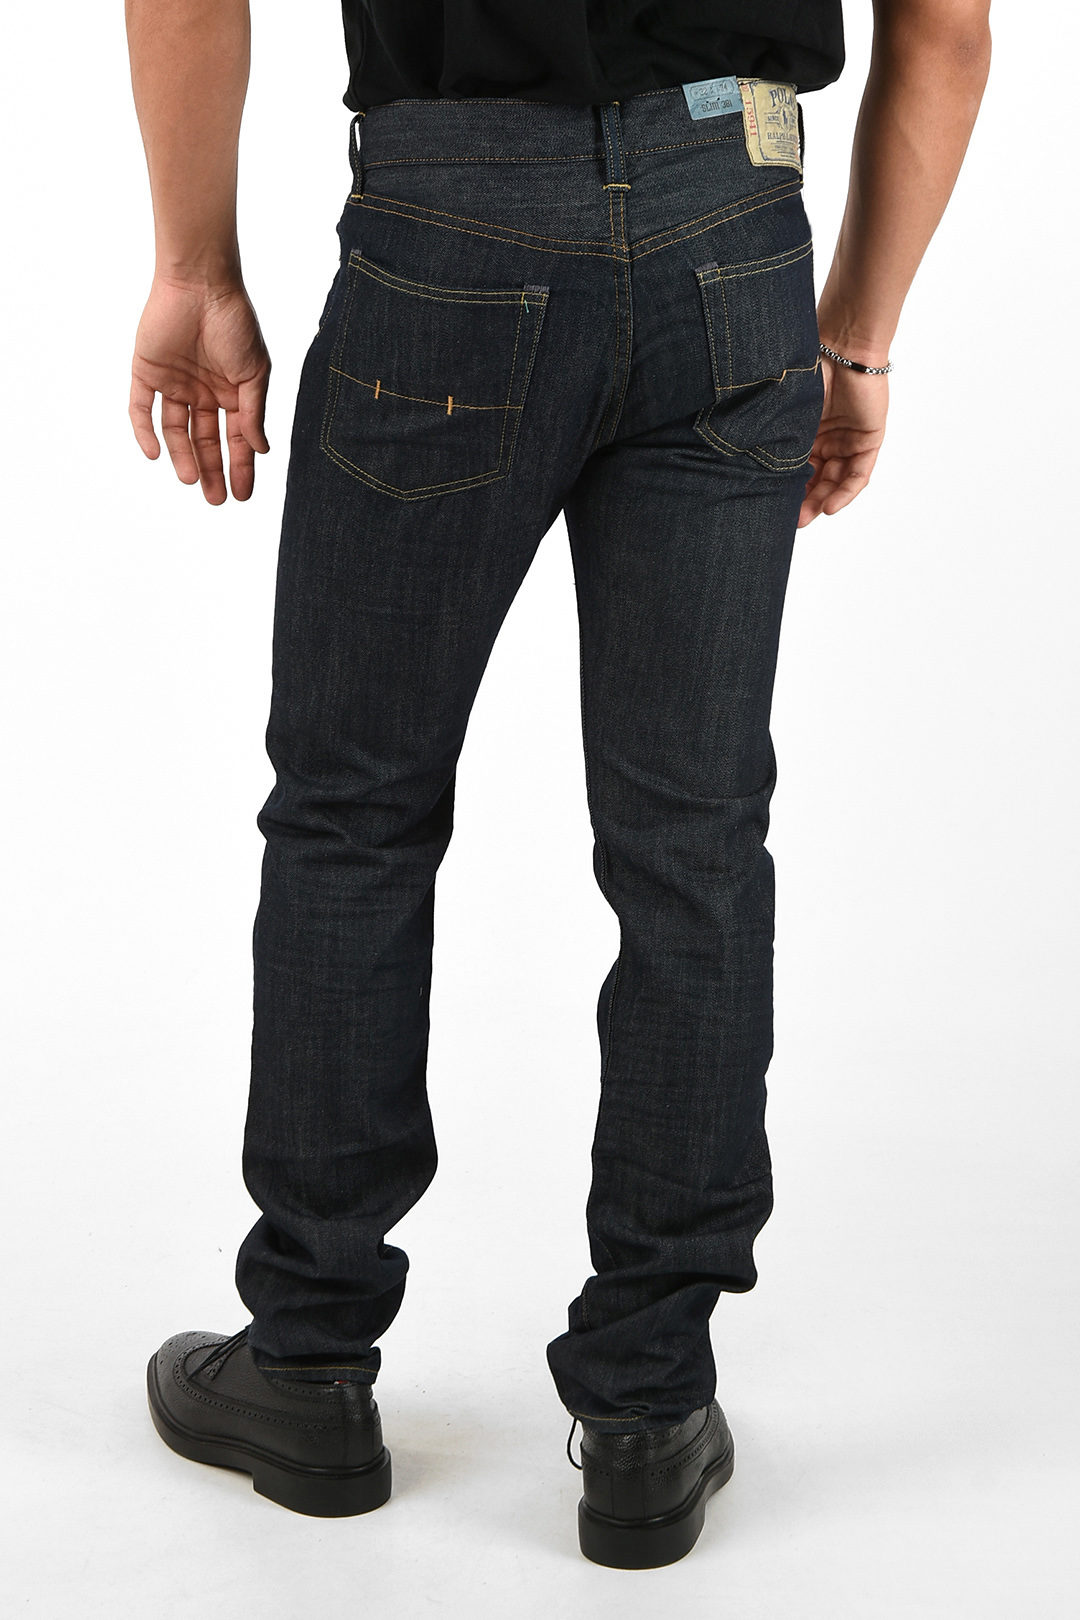 duurzame grondstof toespraak Bijzettafeltje Polo Ralph Lauren 19cm slim fit 381 jeans L34 men - Glamood Outlet